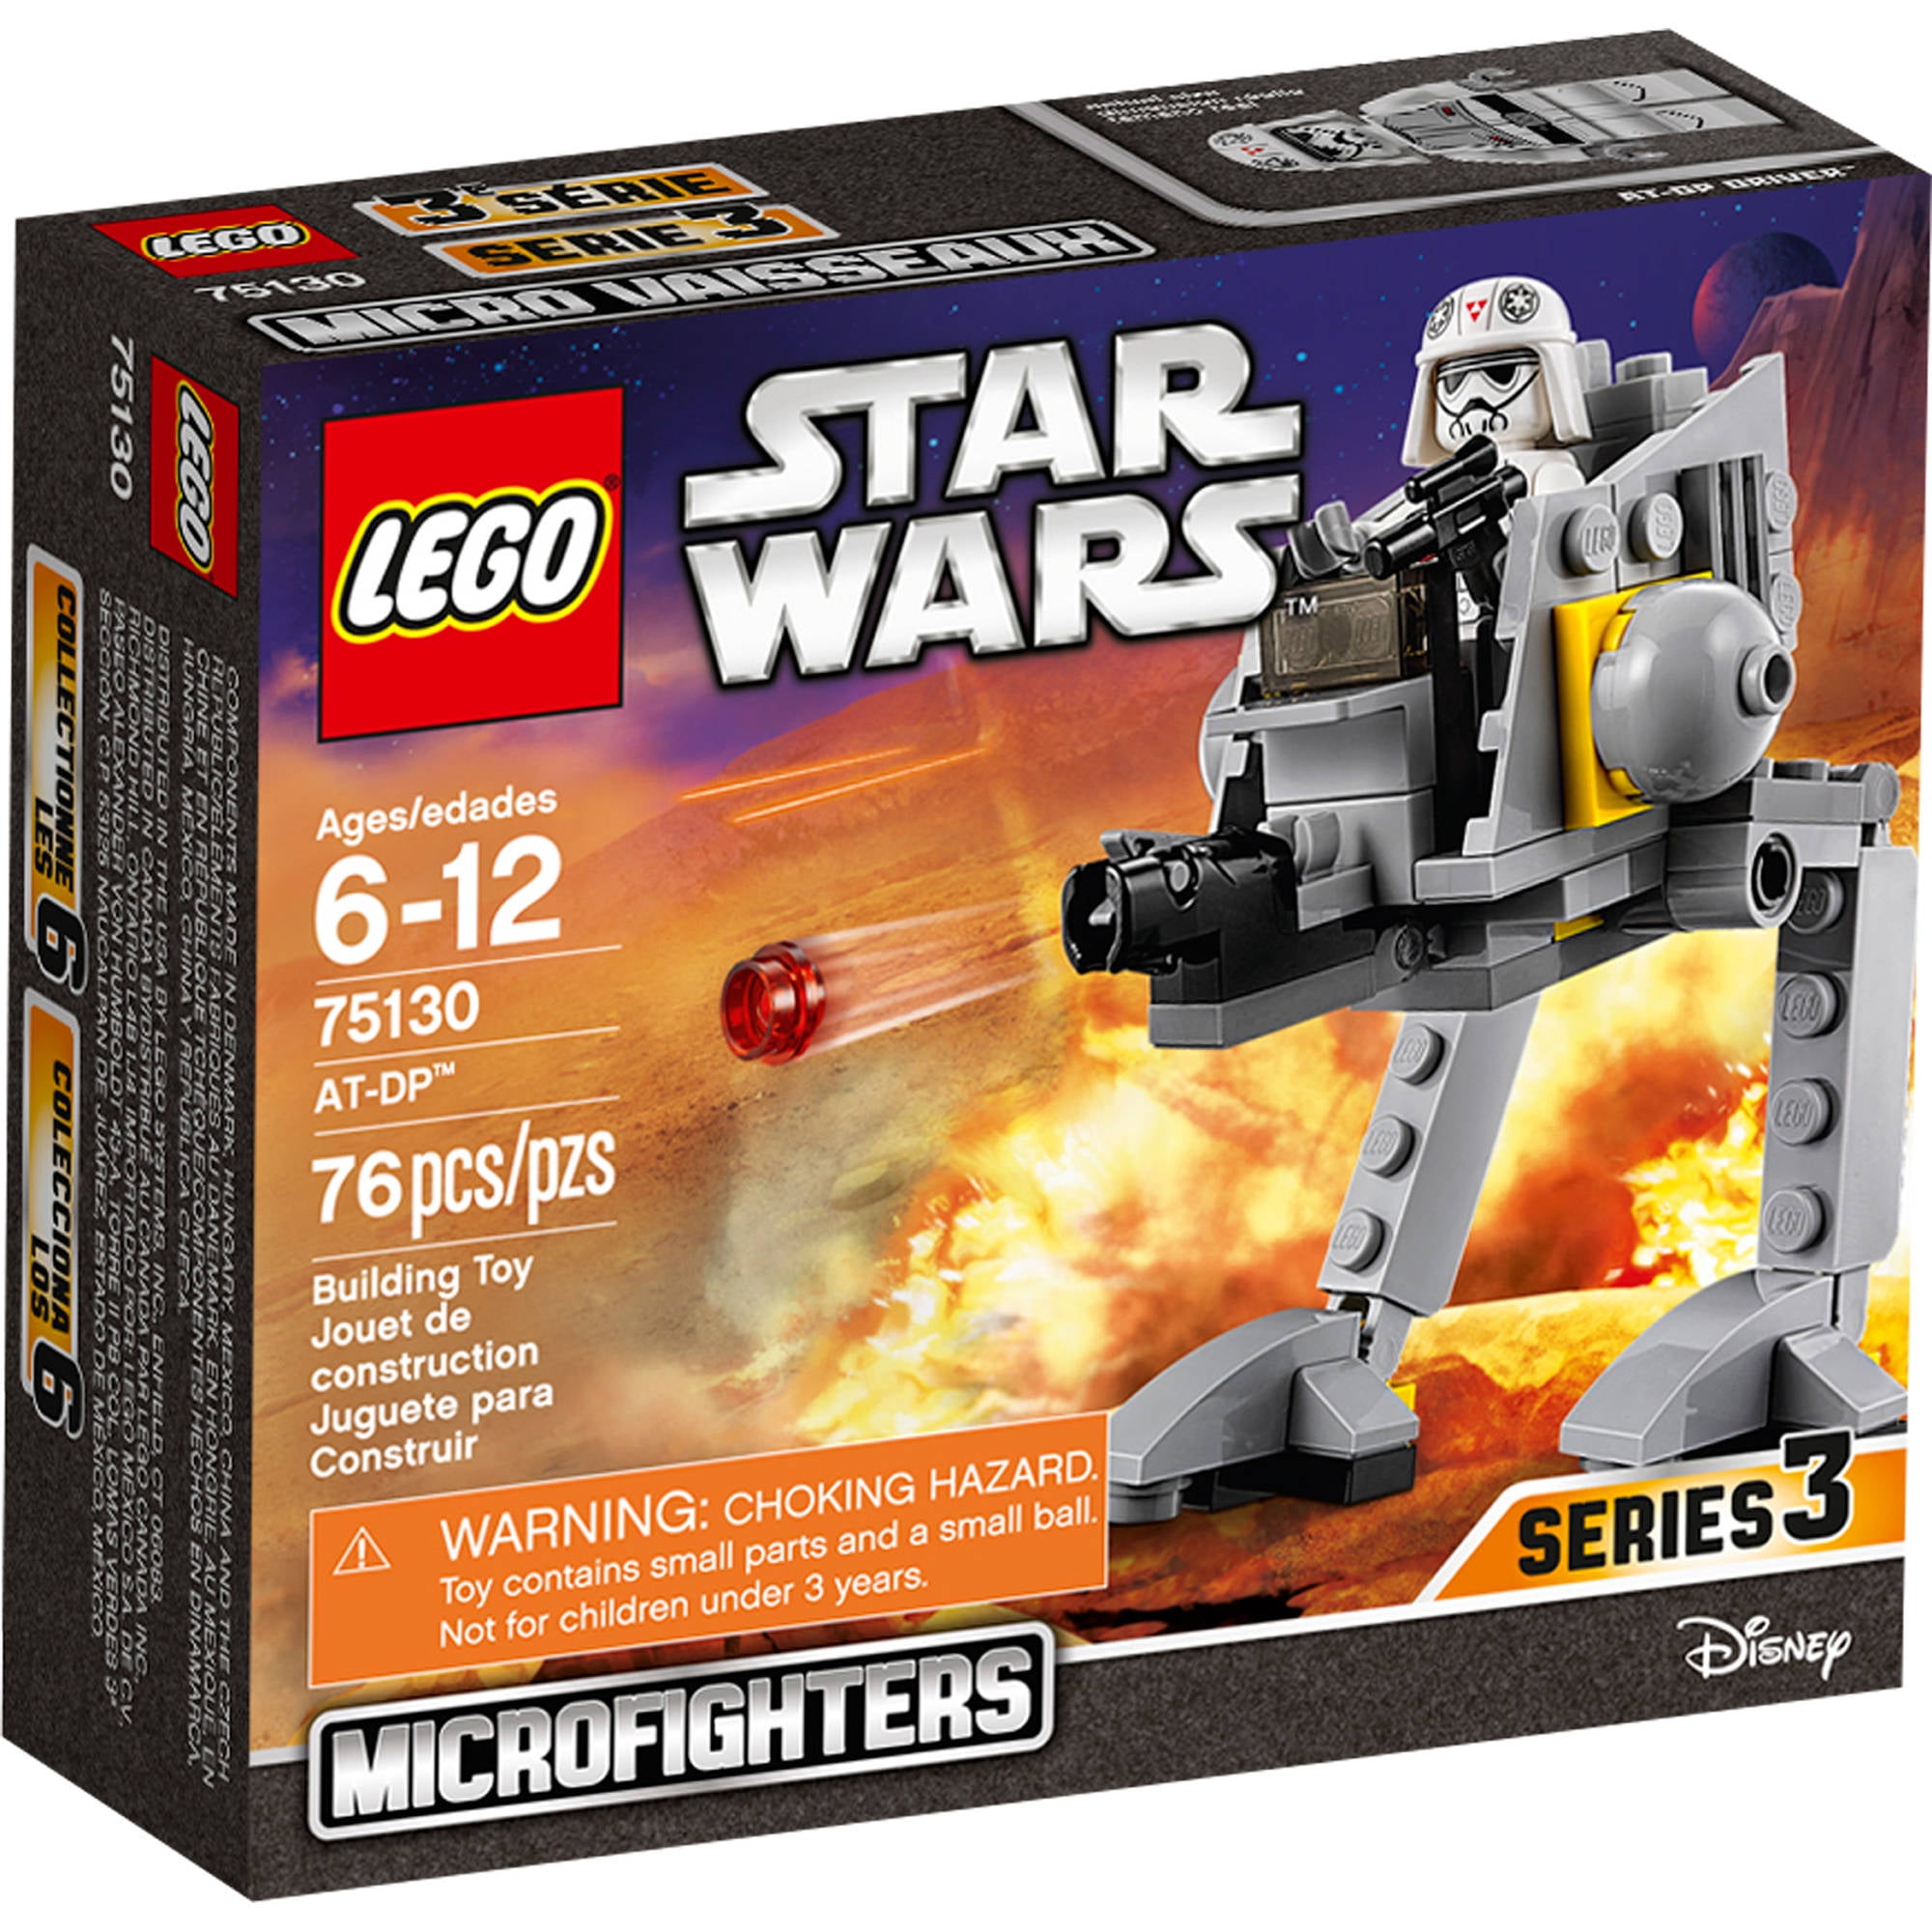 LEGO Star Wars 75344 Le micro vaisseau de Boba Fett, Jouet